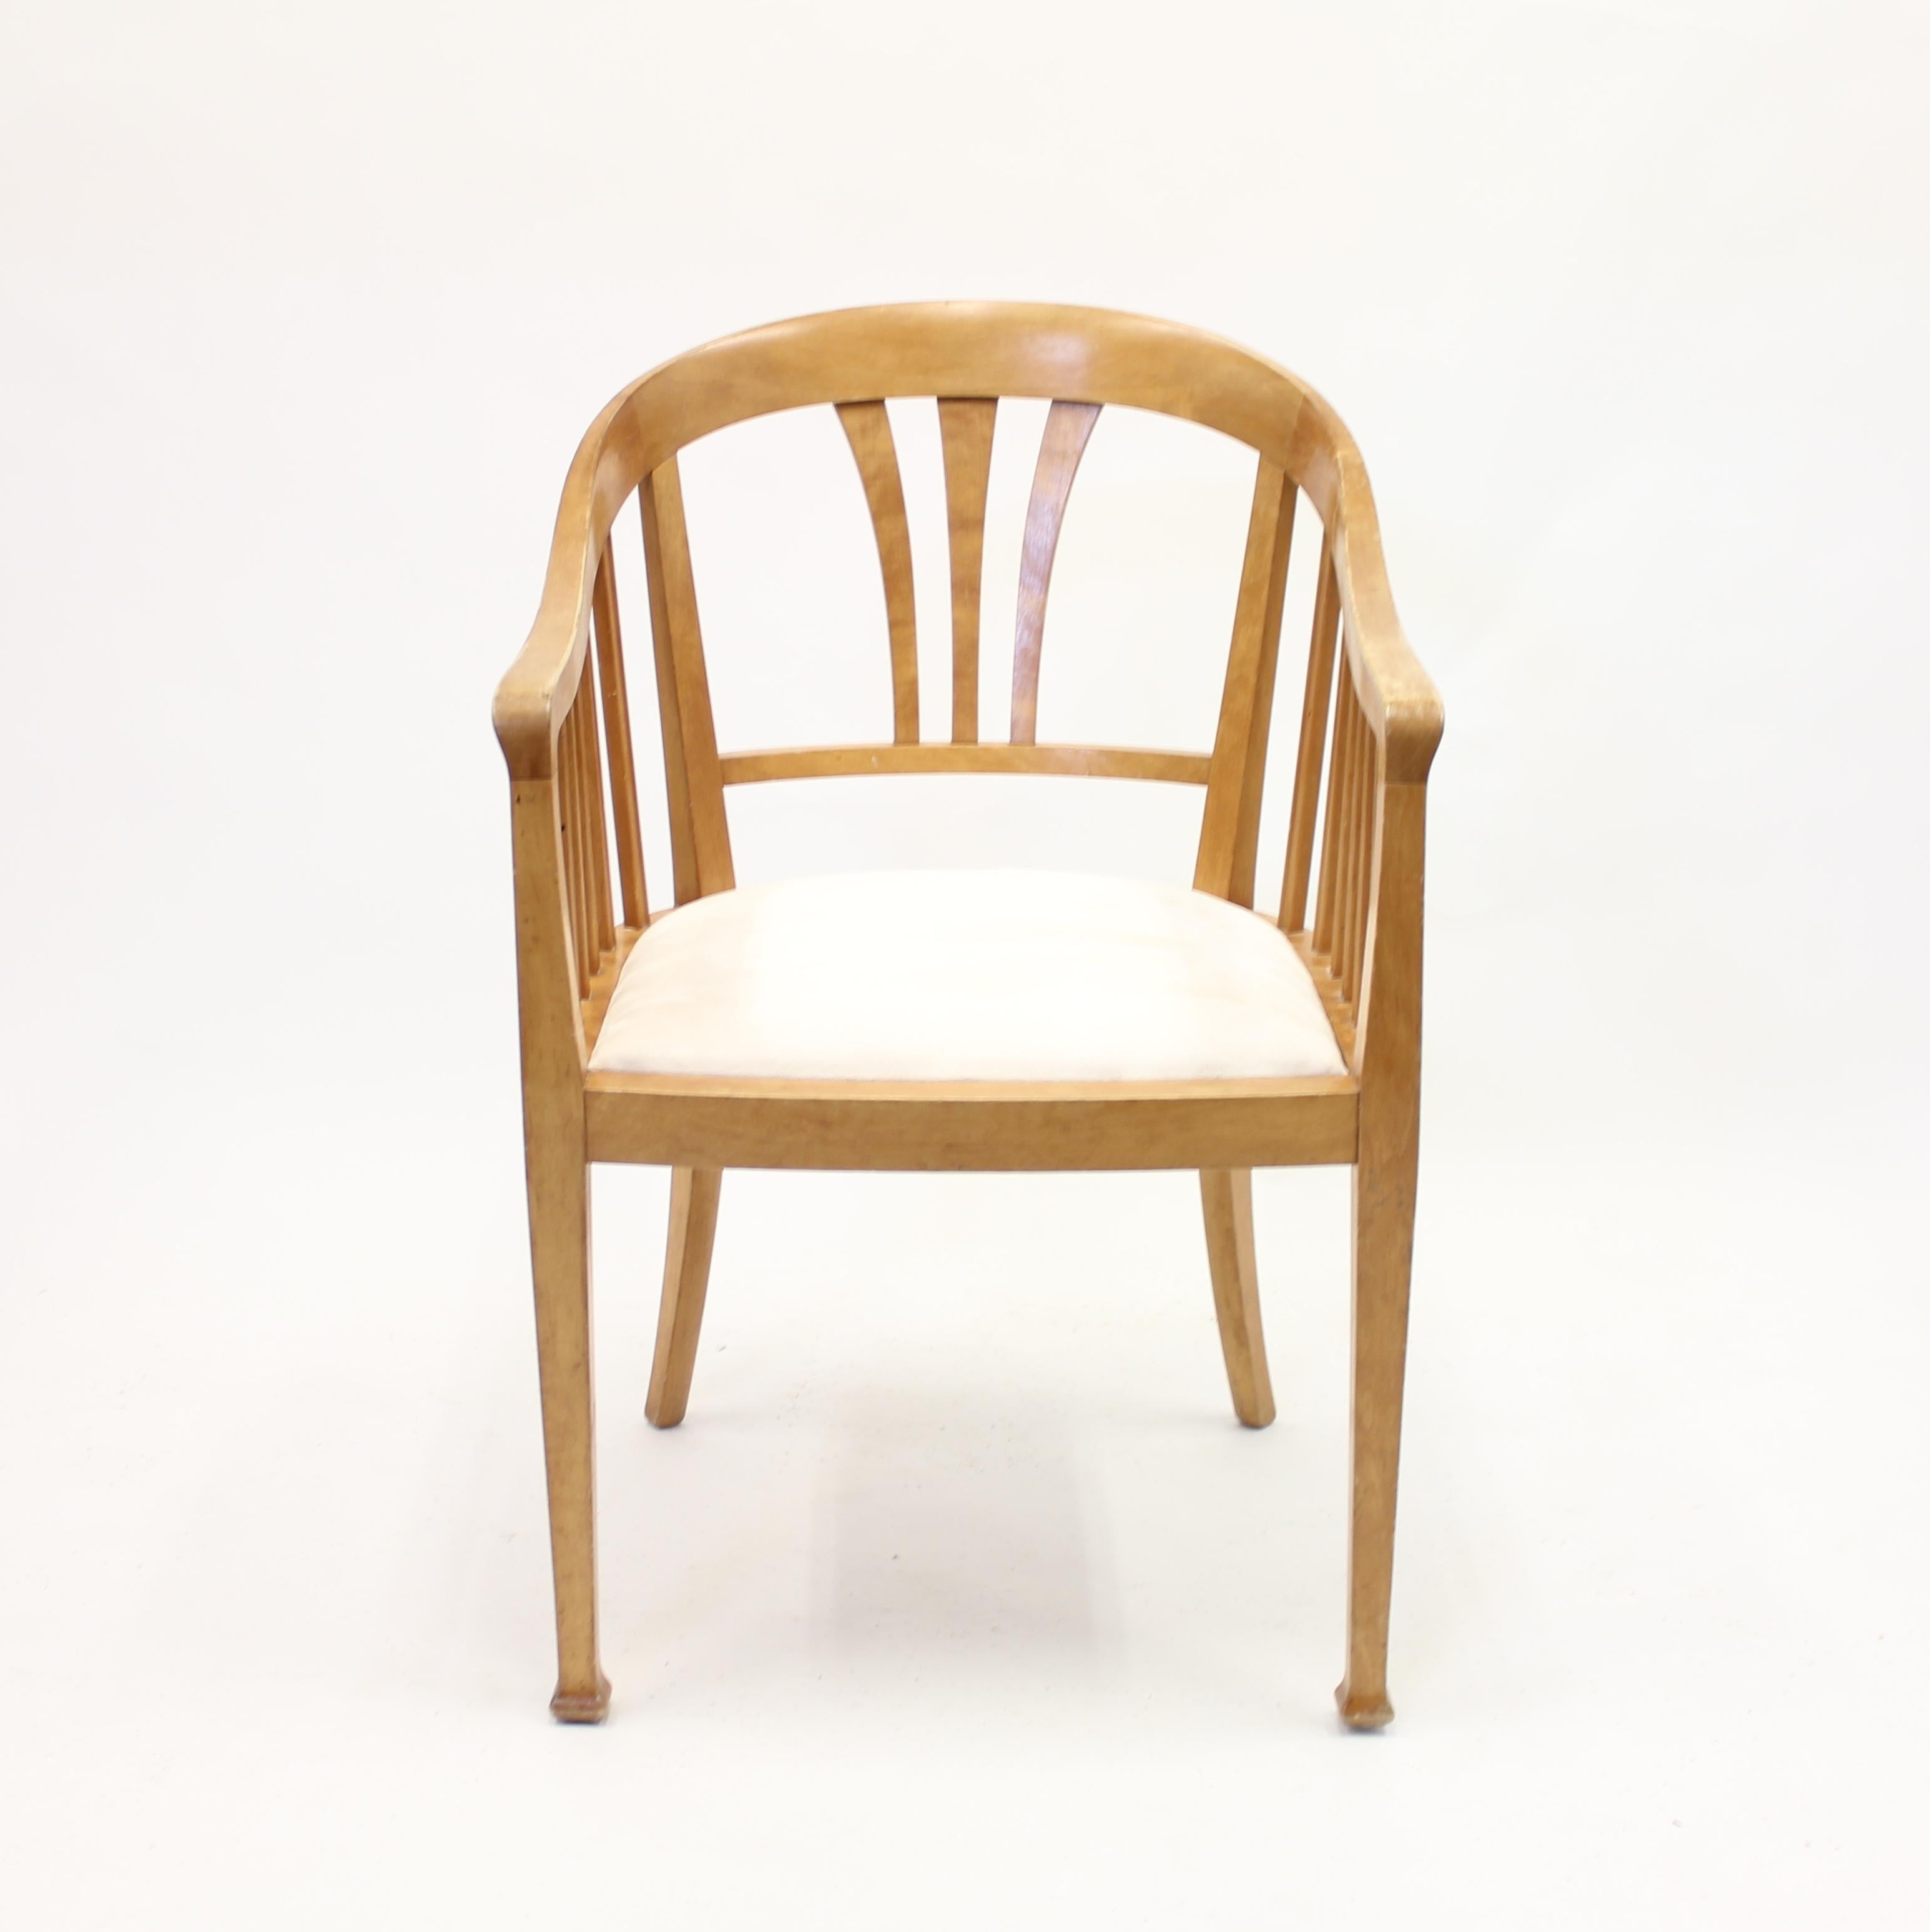 20th Century Scandinavian Birch Art Nouveau Arm Chair, Early 1900s